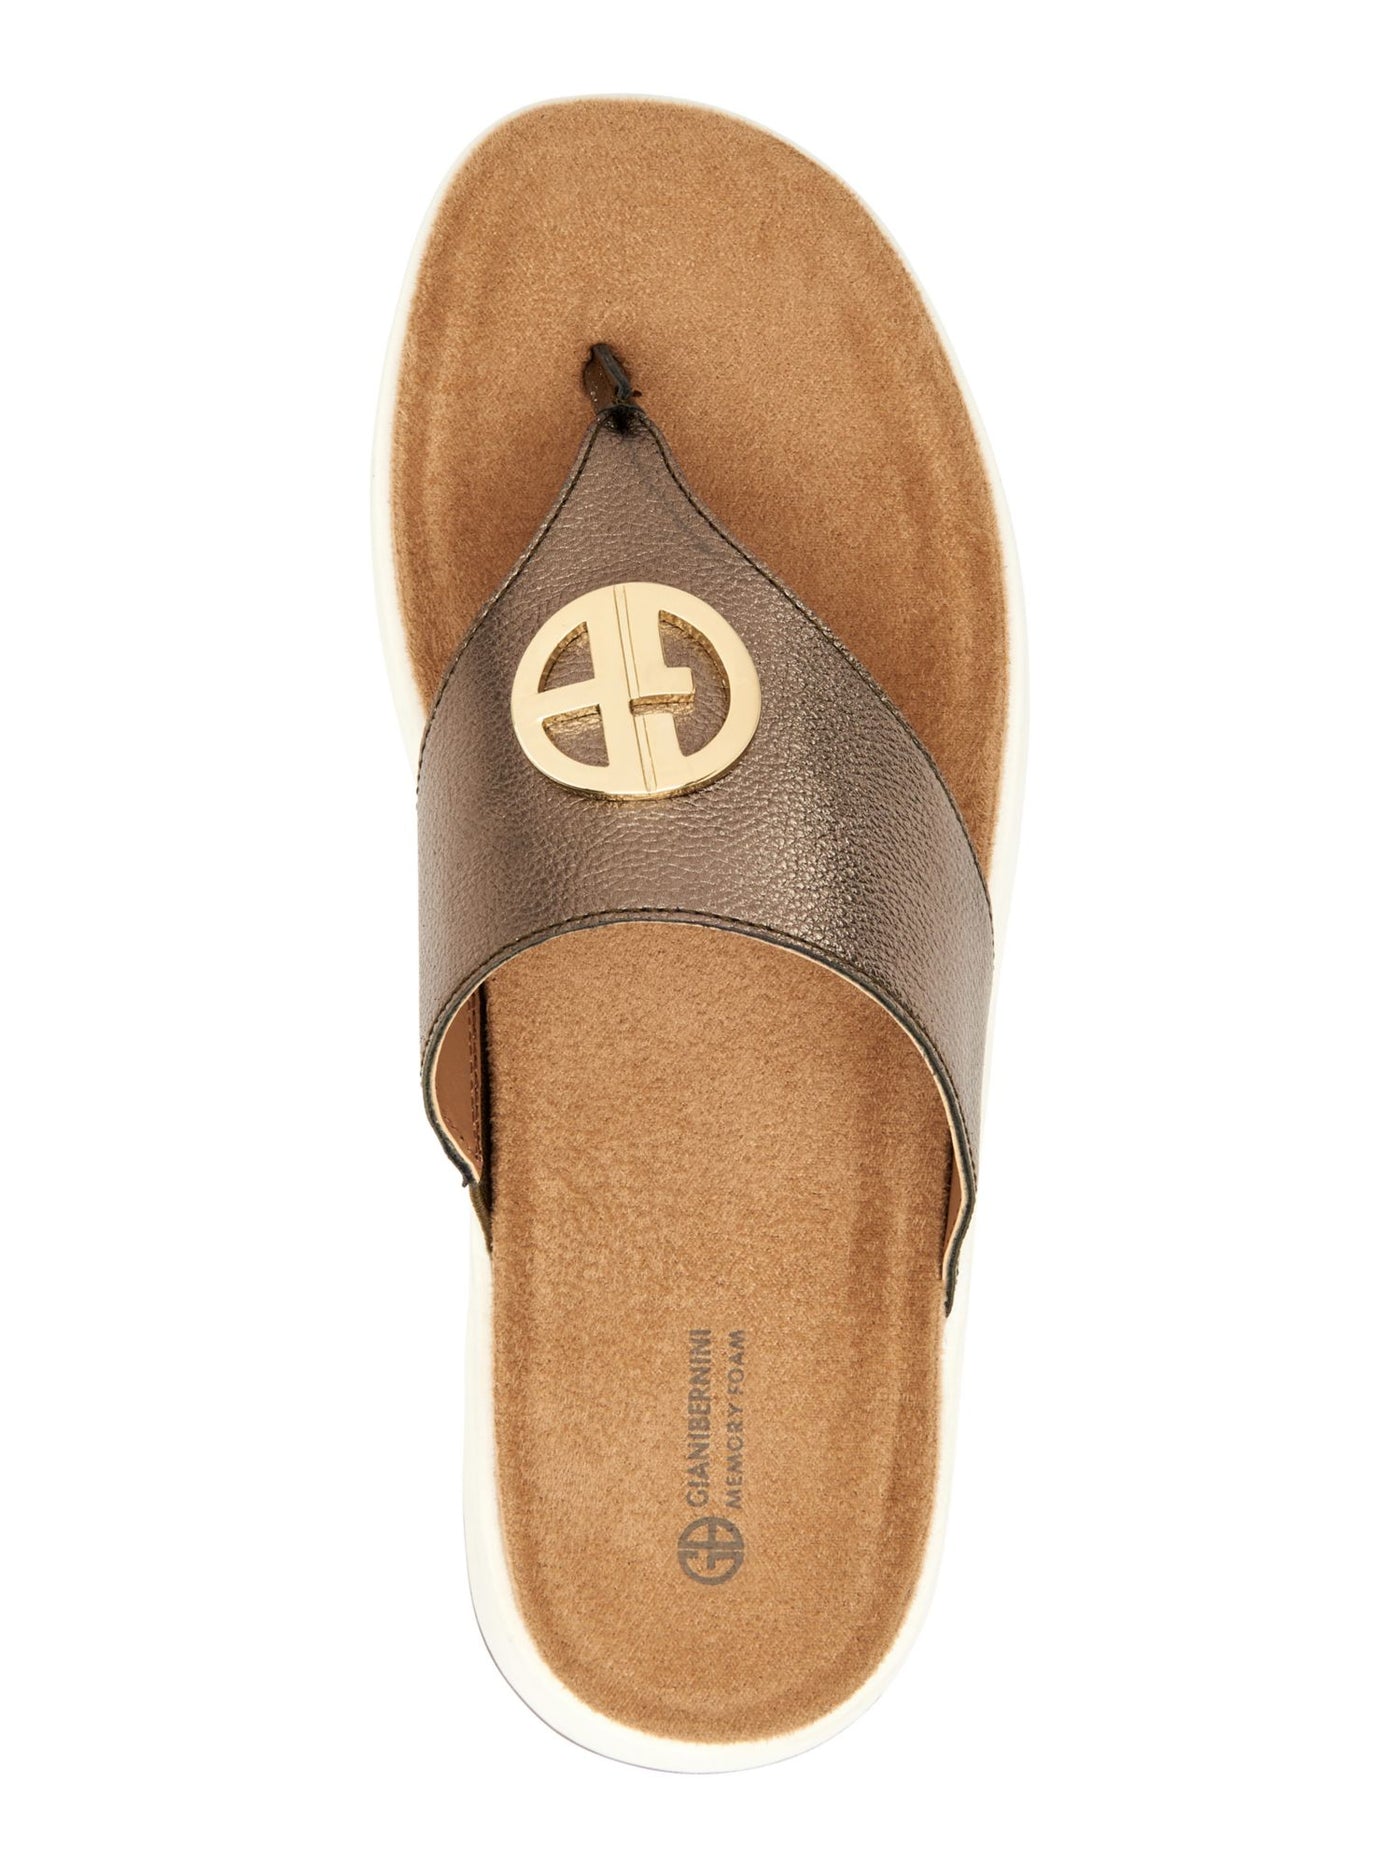 GIANI BERNINI Womens Gold 1" Platform Logo Comfort Sportii Round Toe Wedge Slip On Thong Sandals Shoes 9 M